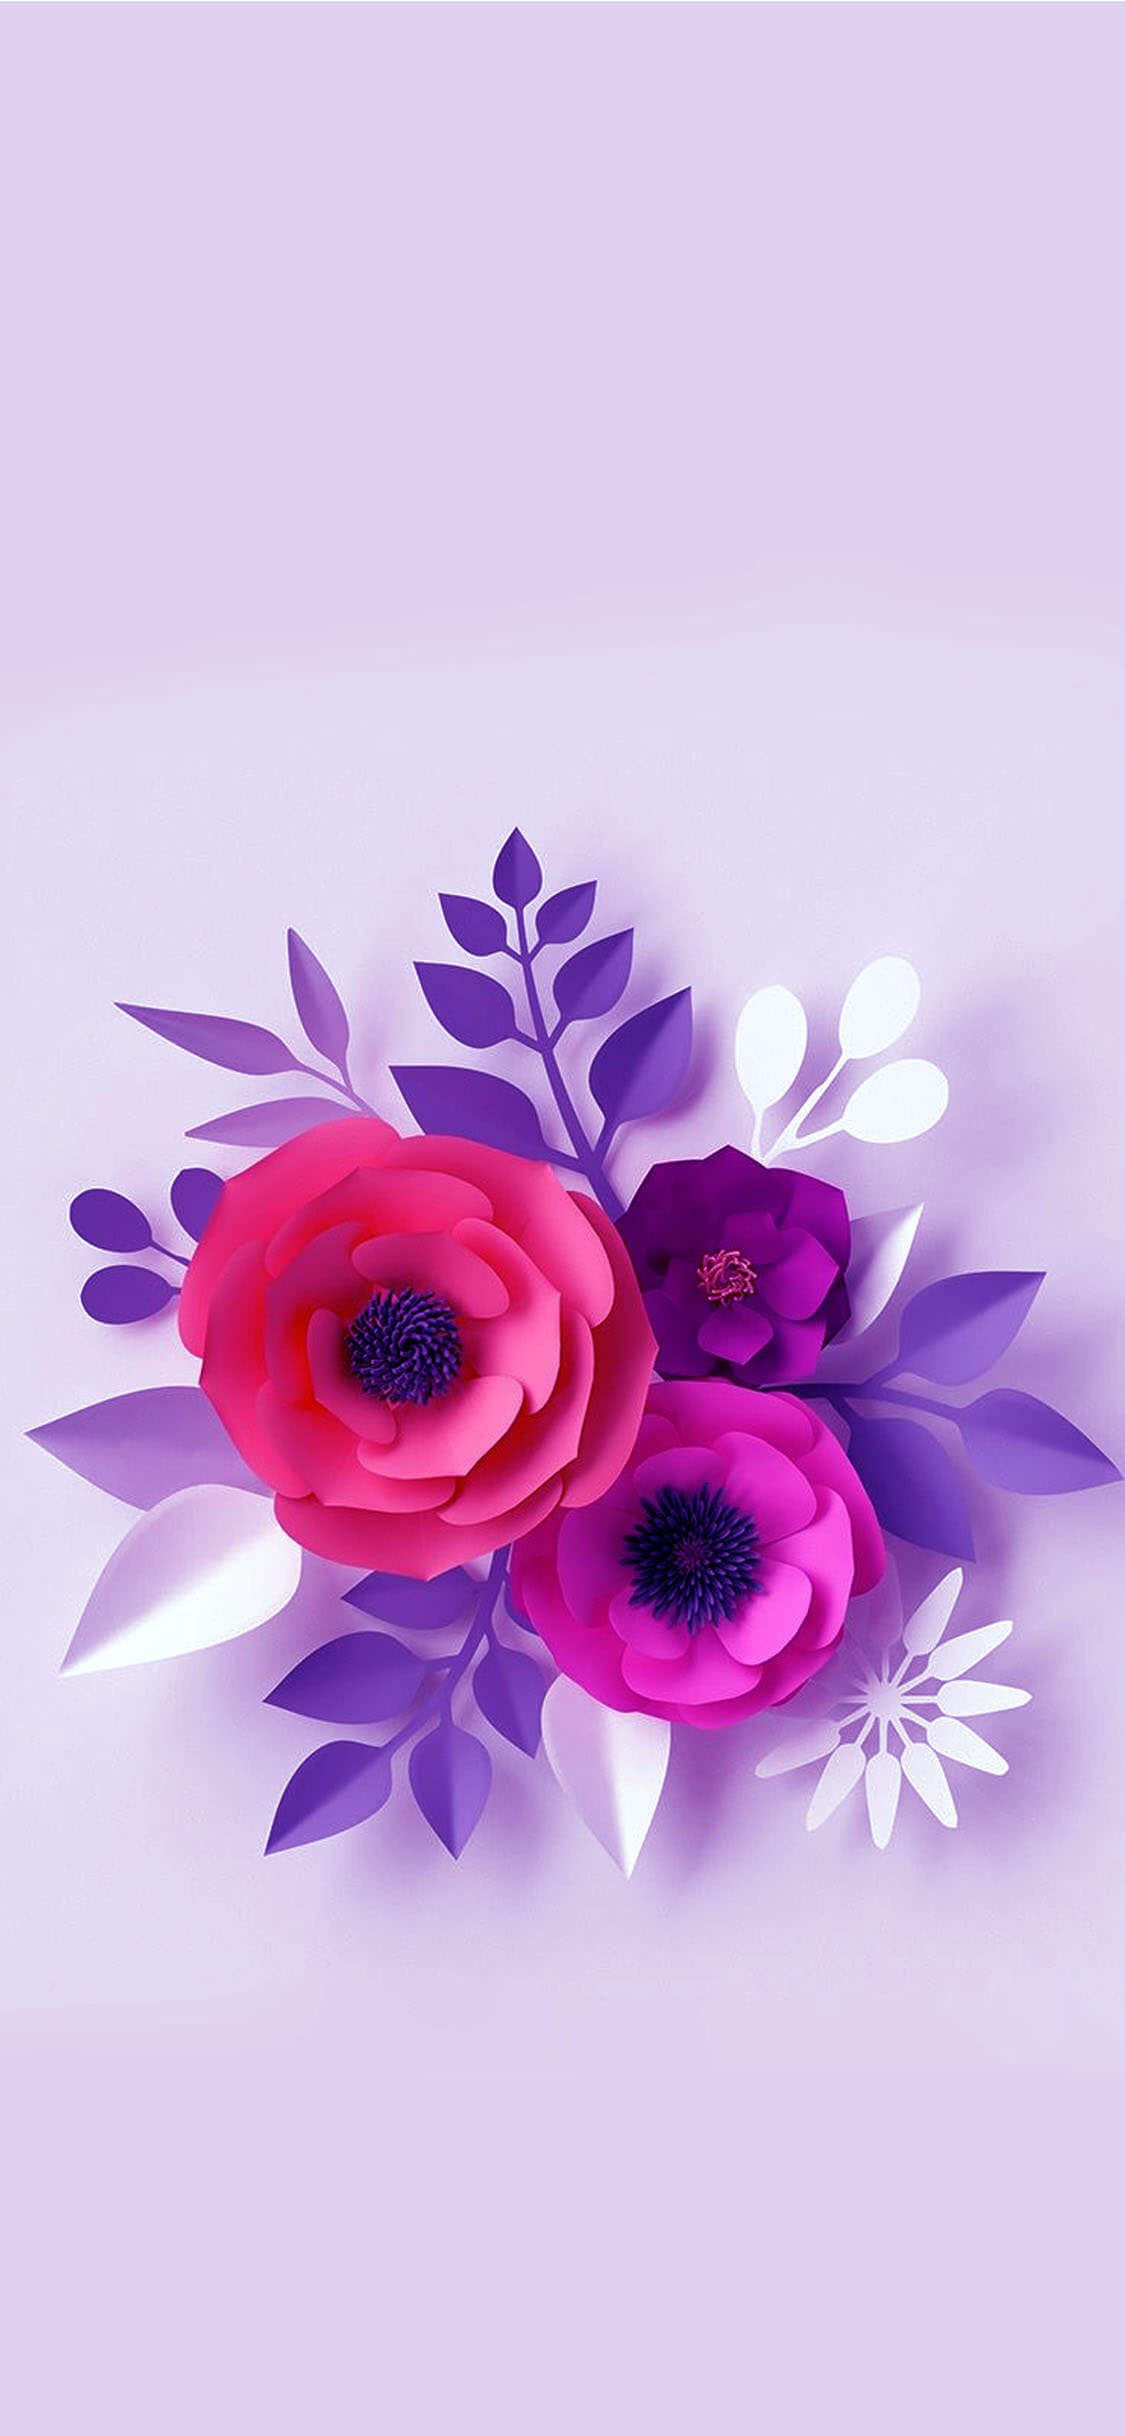 4K Flower Iphone X Wallpapers